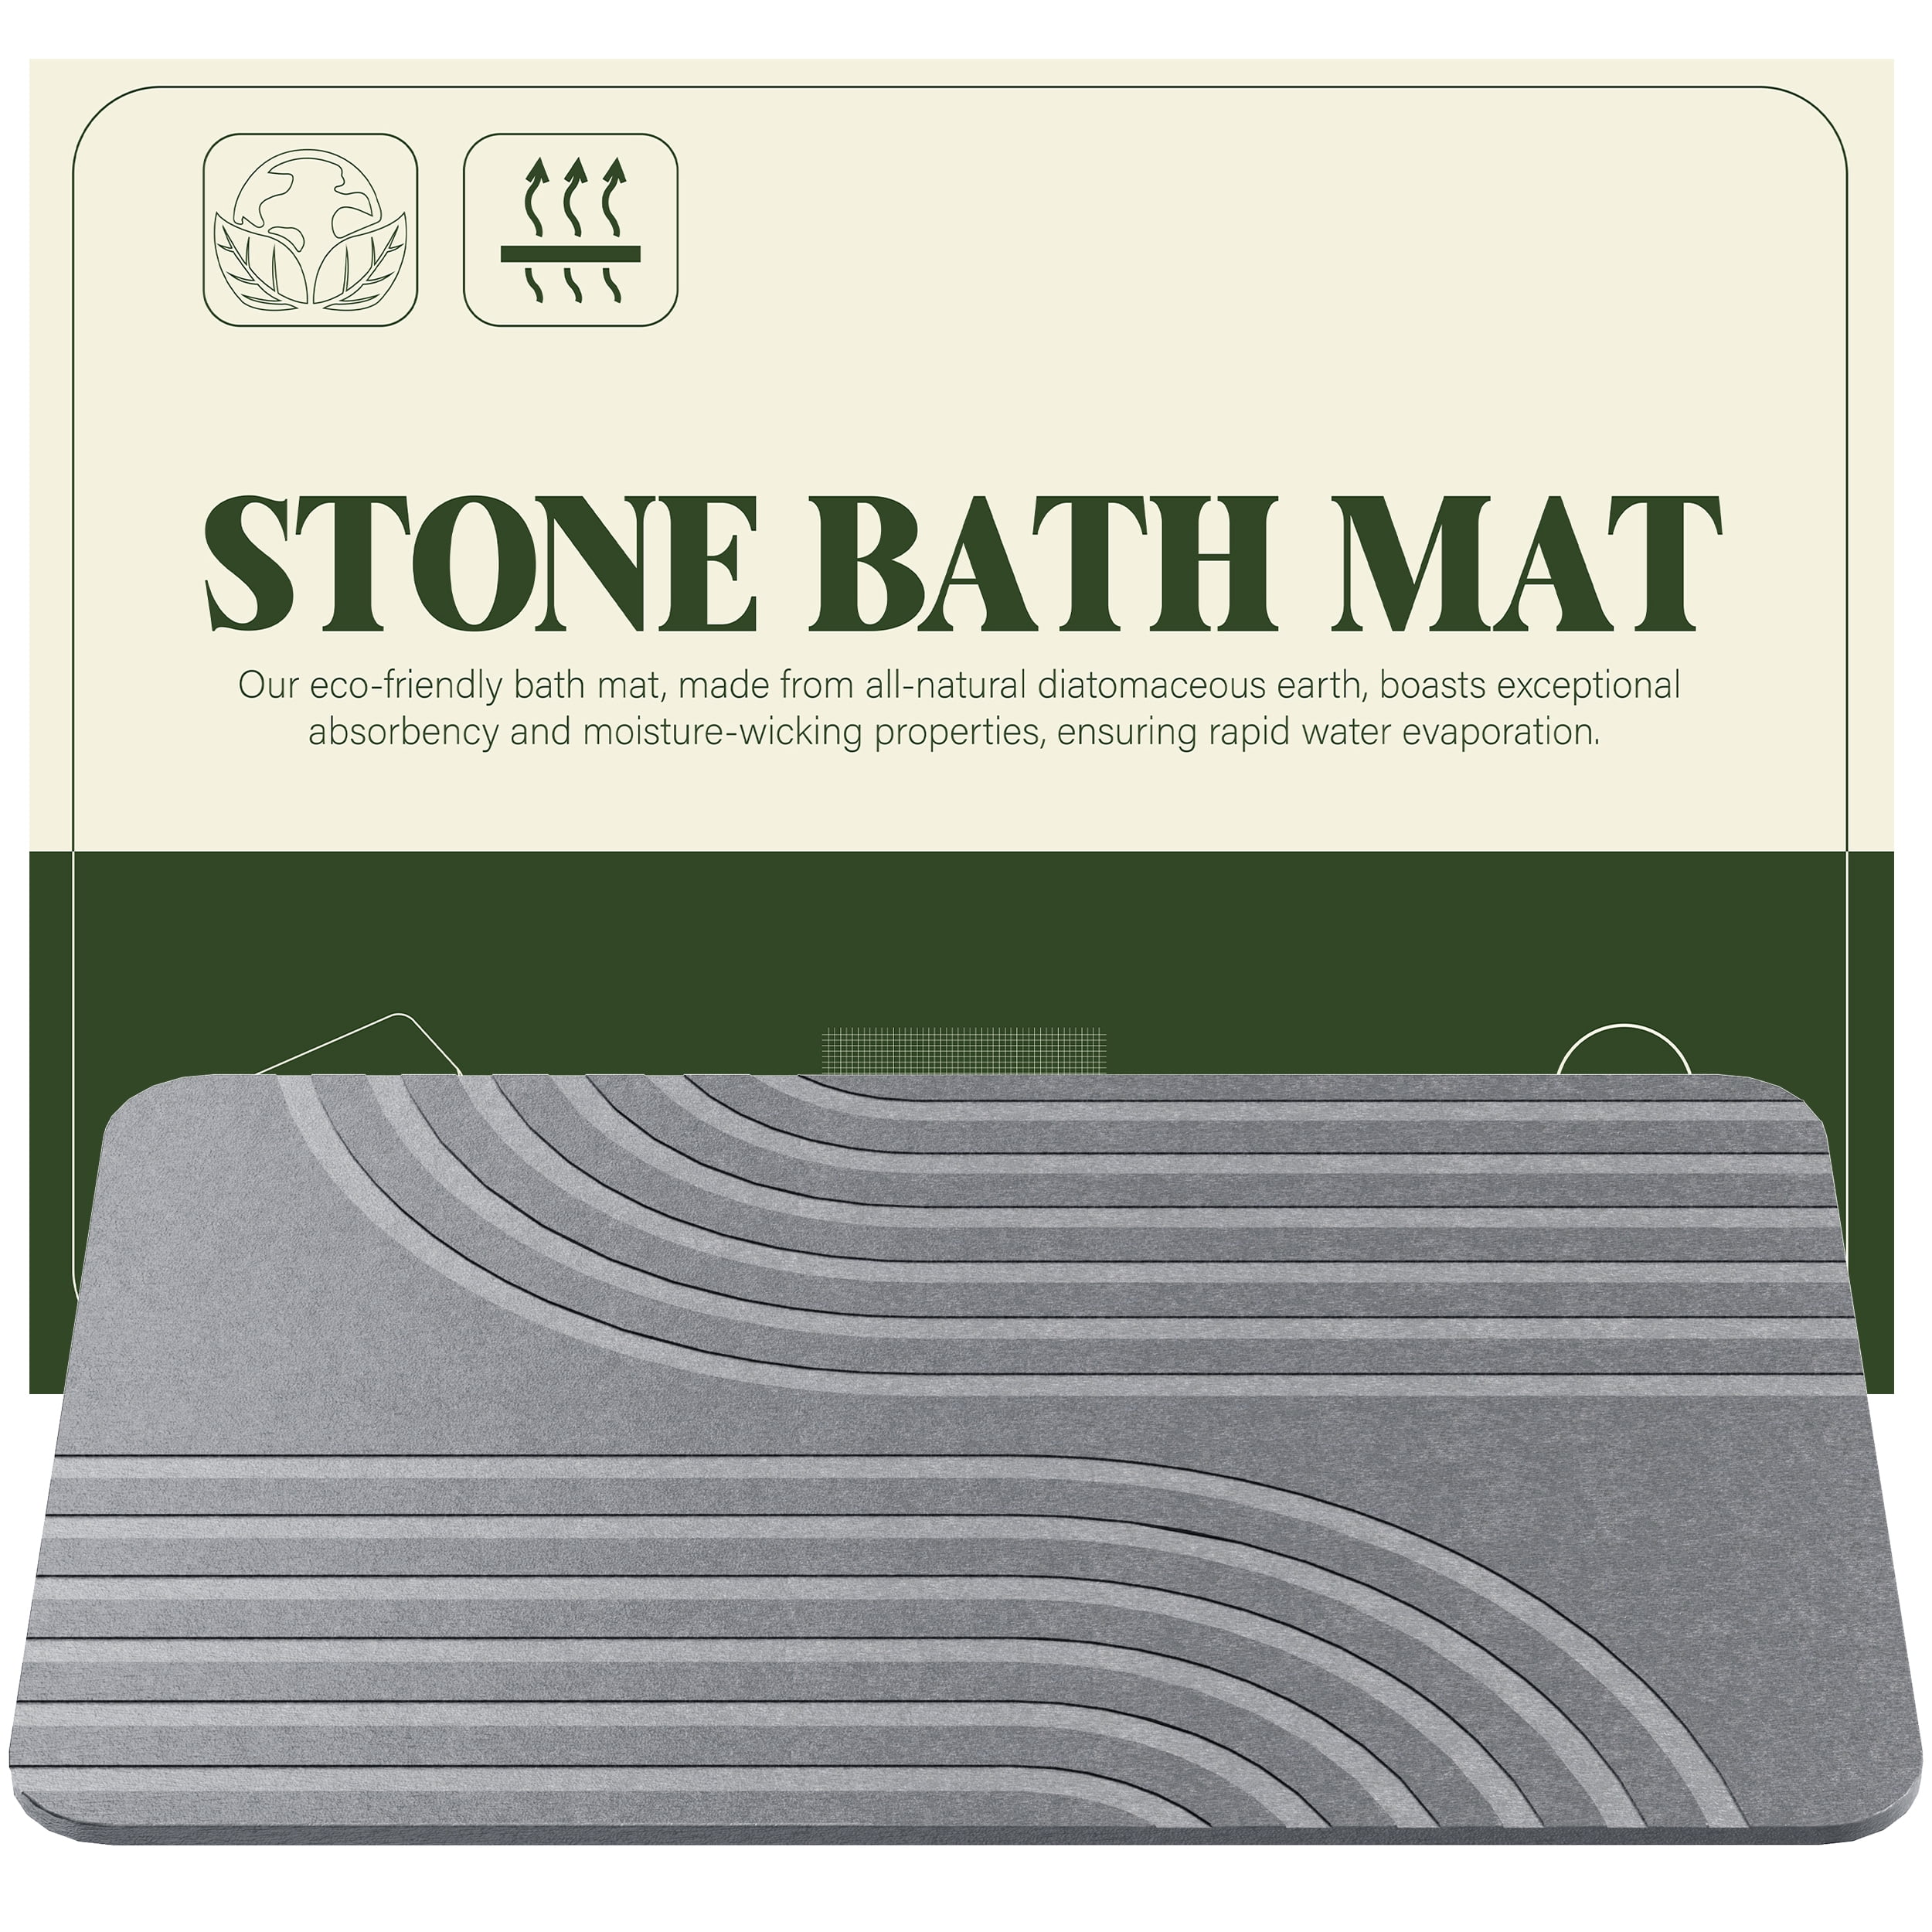 Minimalism Quick Drying Diatomaceous Earth Stone Mat, Stone Dish